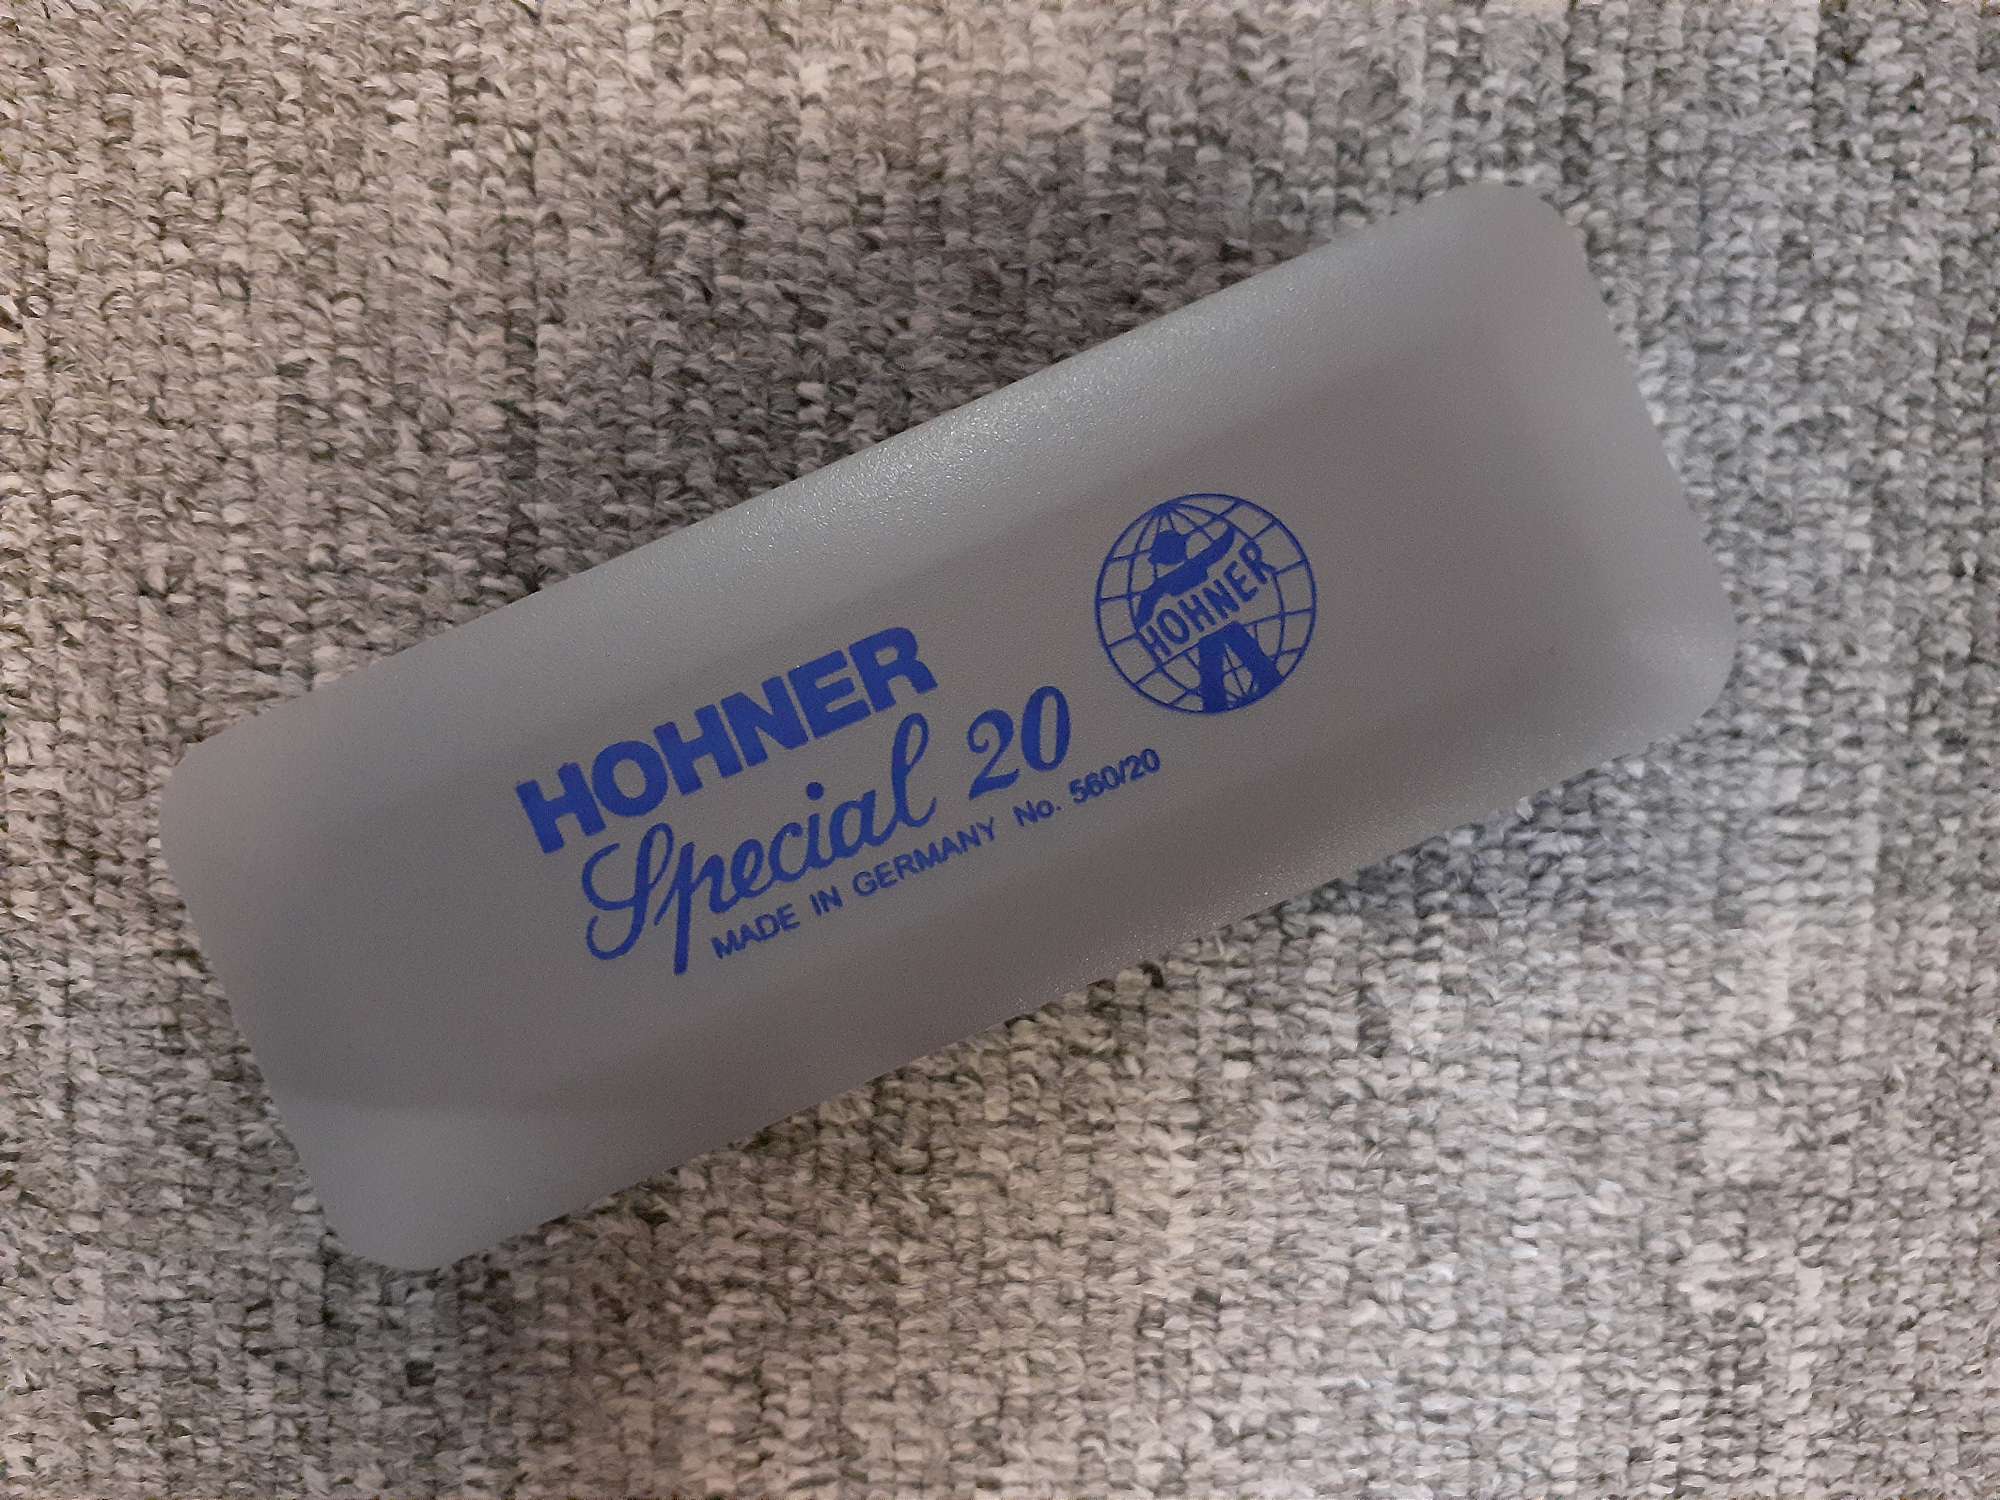 Hohner Special 20 Classic G Harmonica